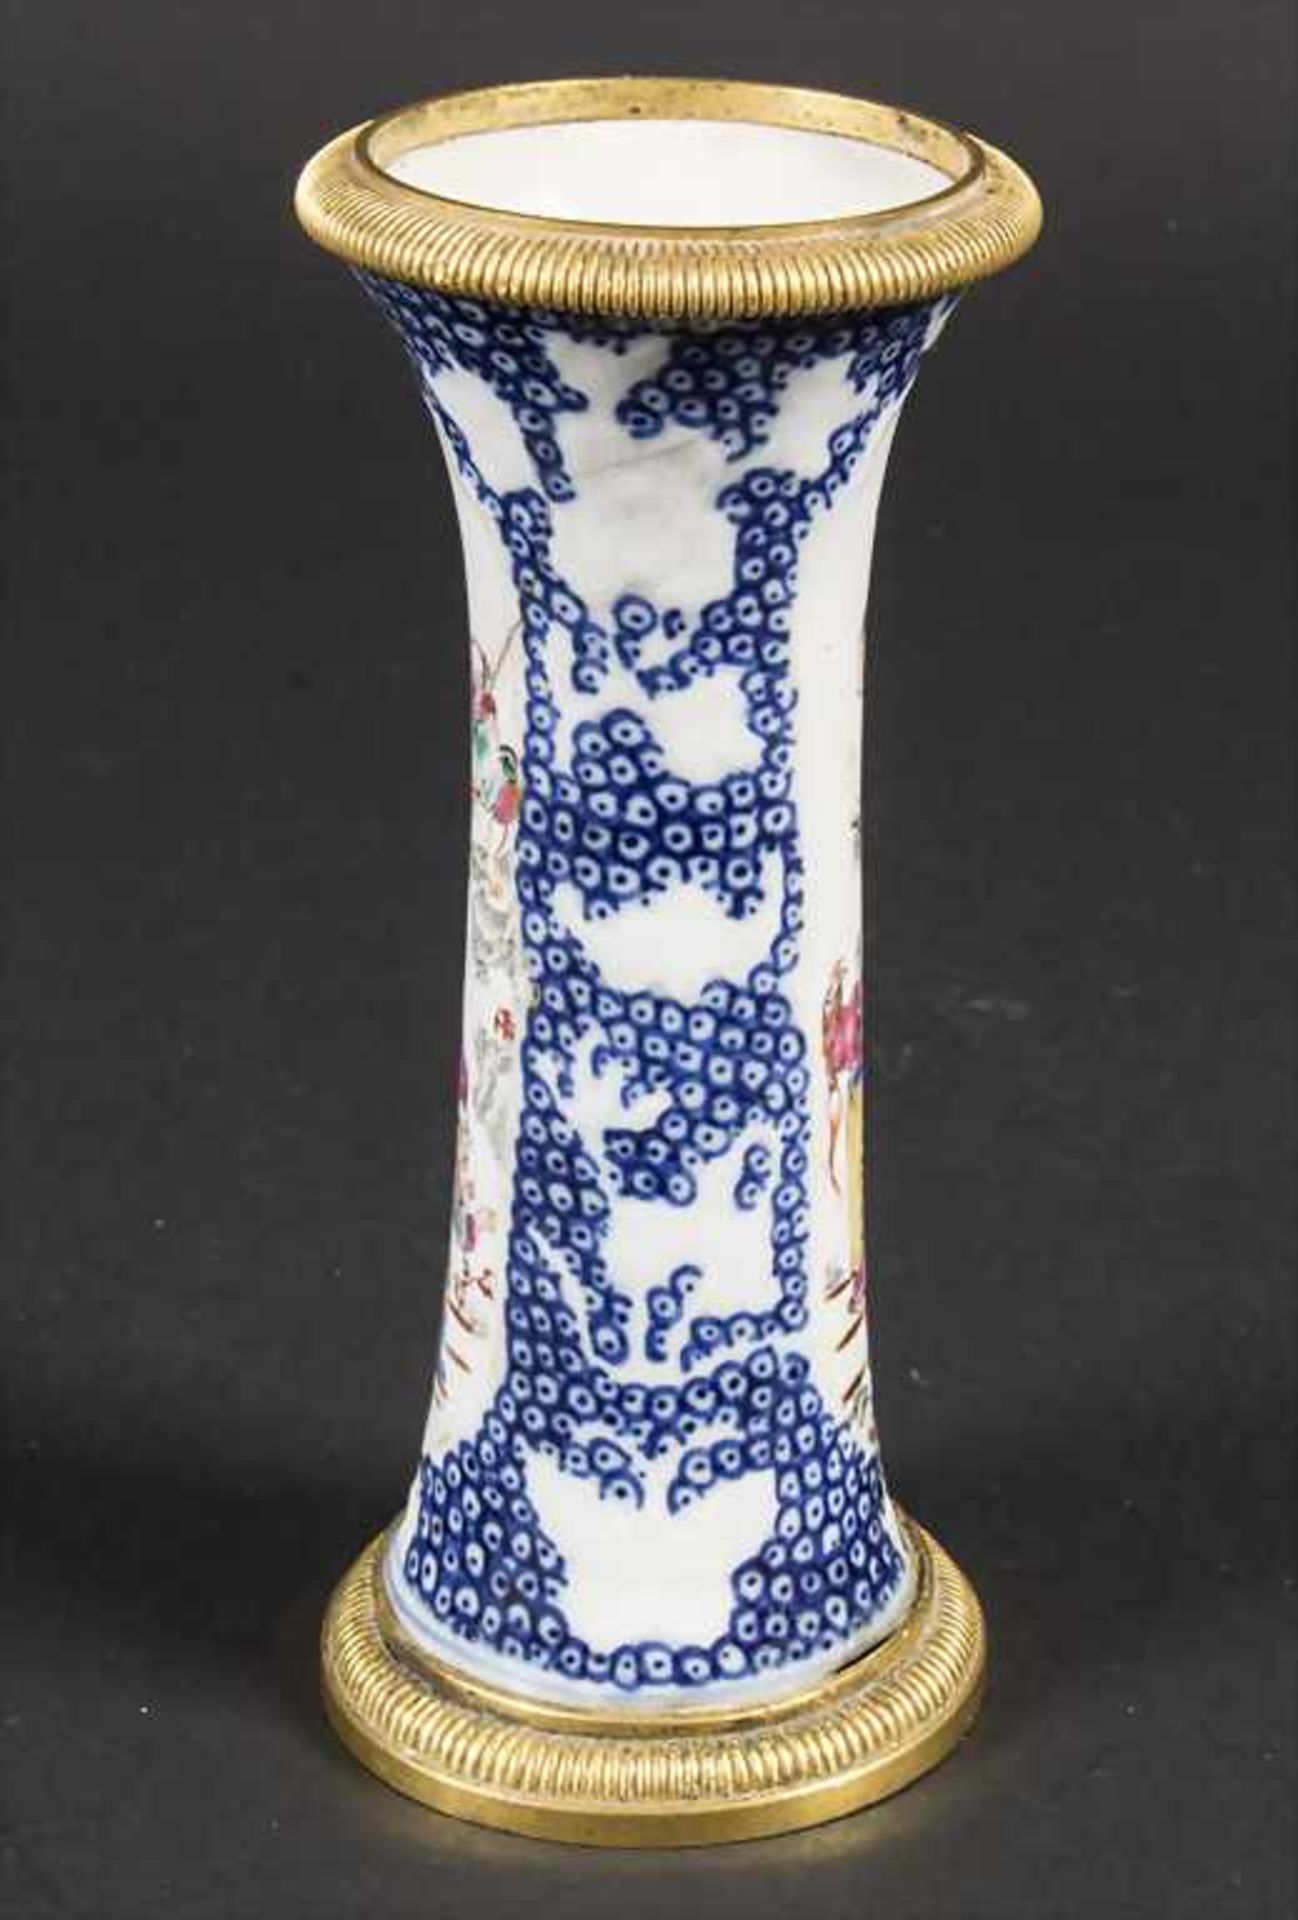 Ziervase / A decorative porcelain vase, China, Qing Dynastie (1644-1911), 18. Jh. - Image 4 of 9